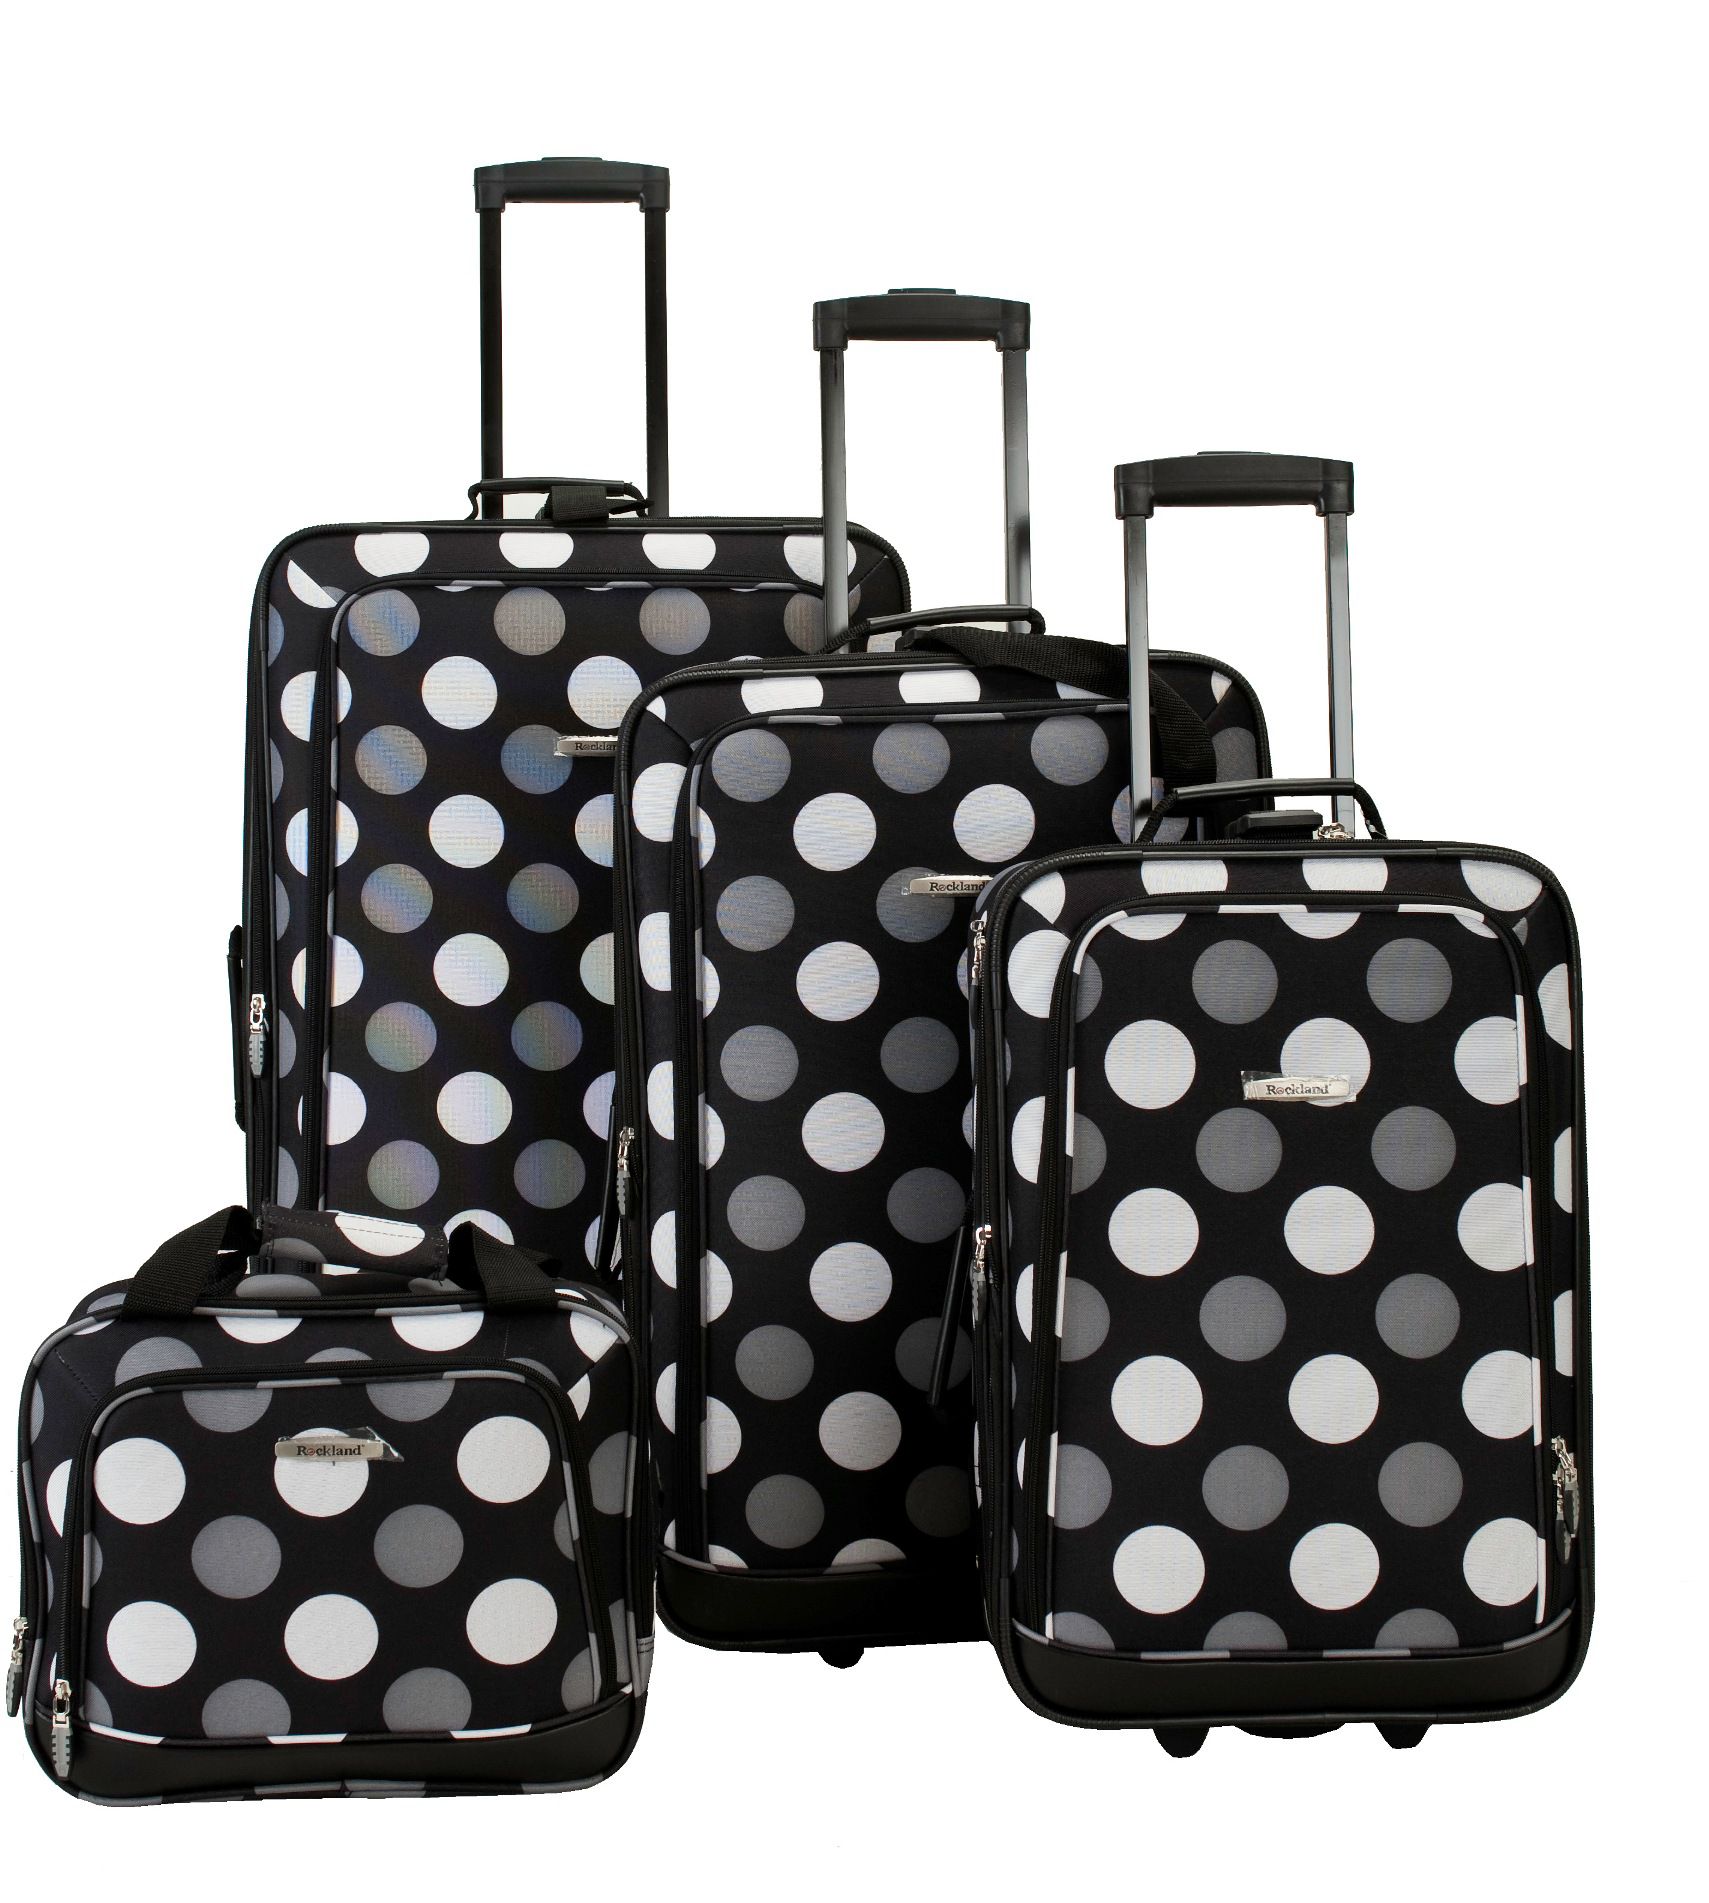 Rockland Fox Luggage 4-Piece Luggage Set - Black & White Polka Dot